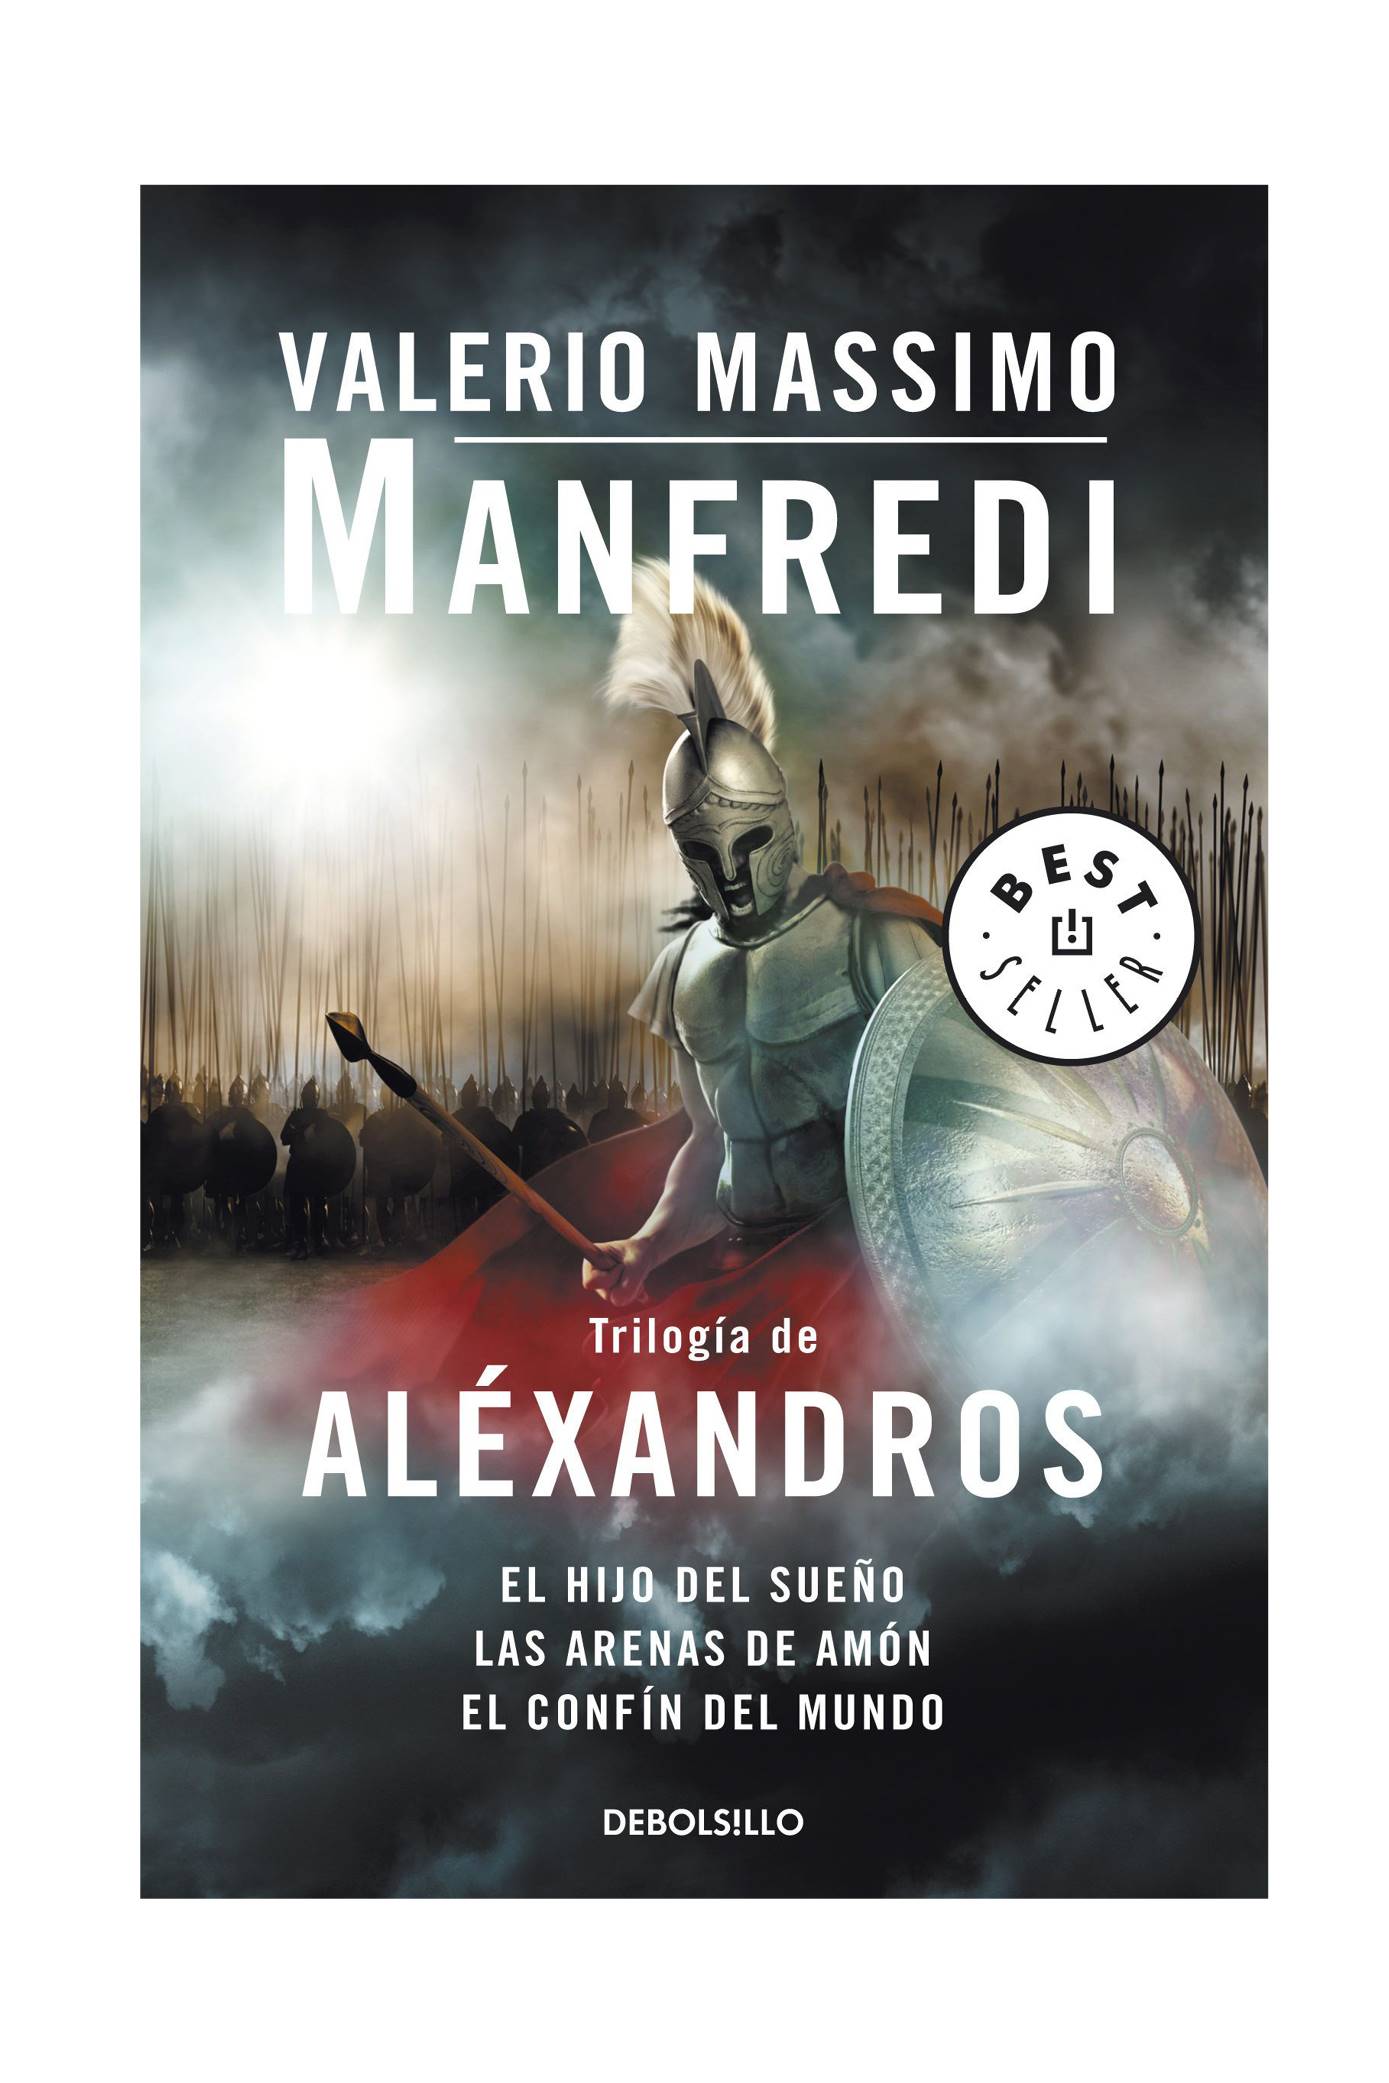 novela historica valerio massimo manfredi trilogia alexandros